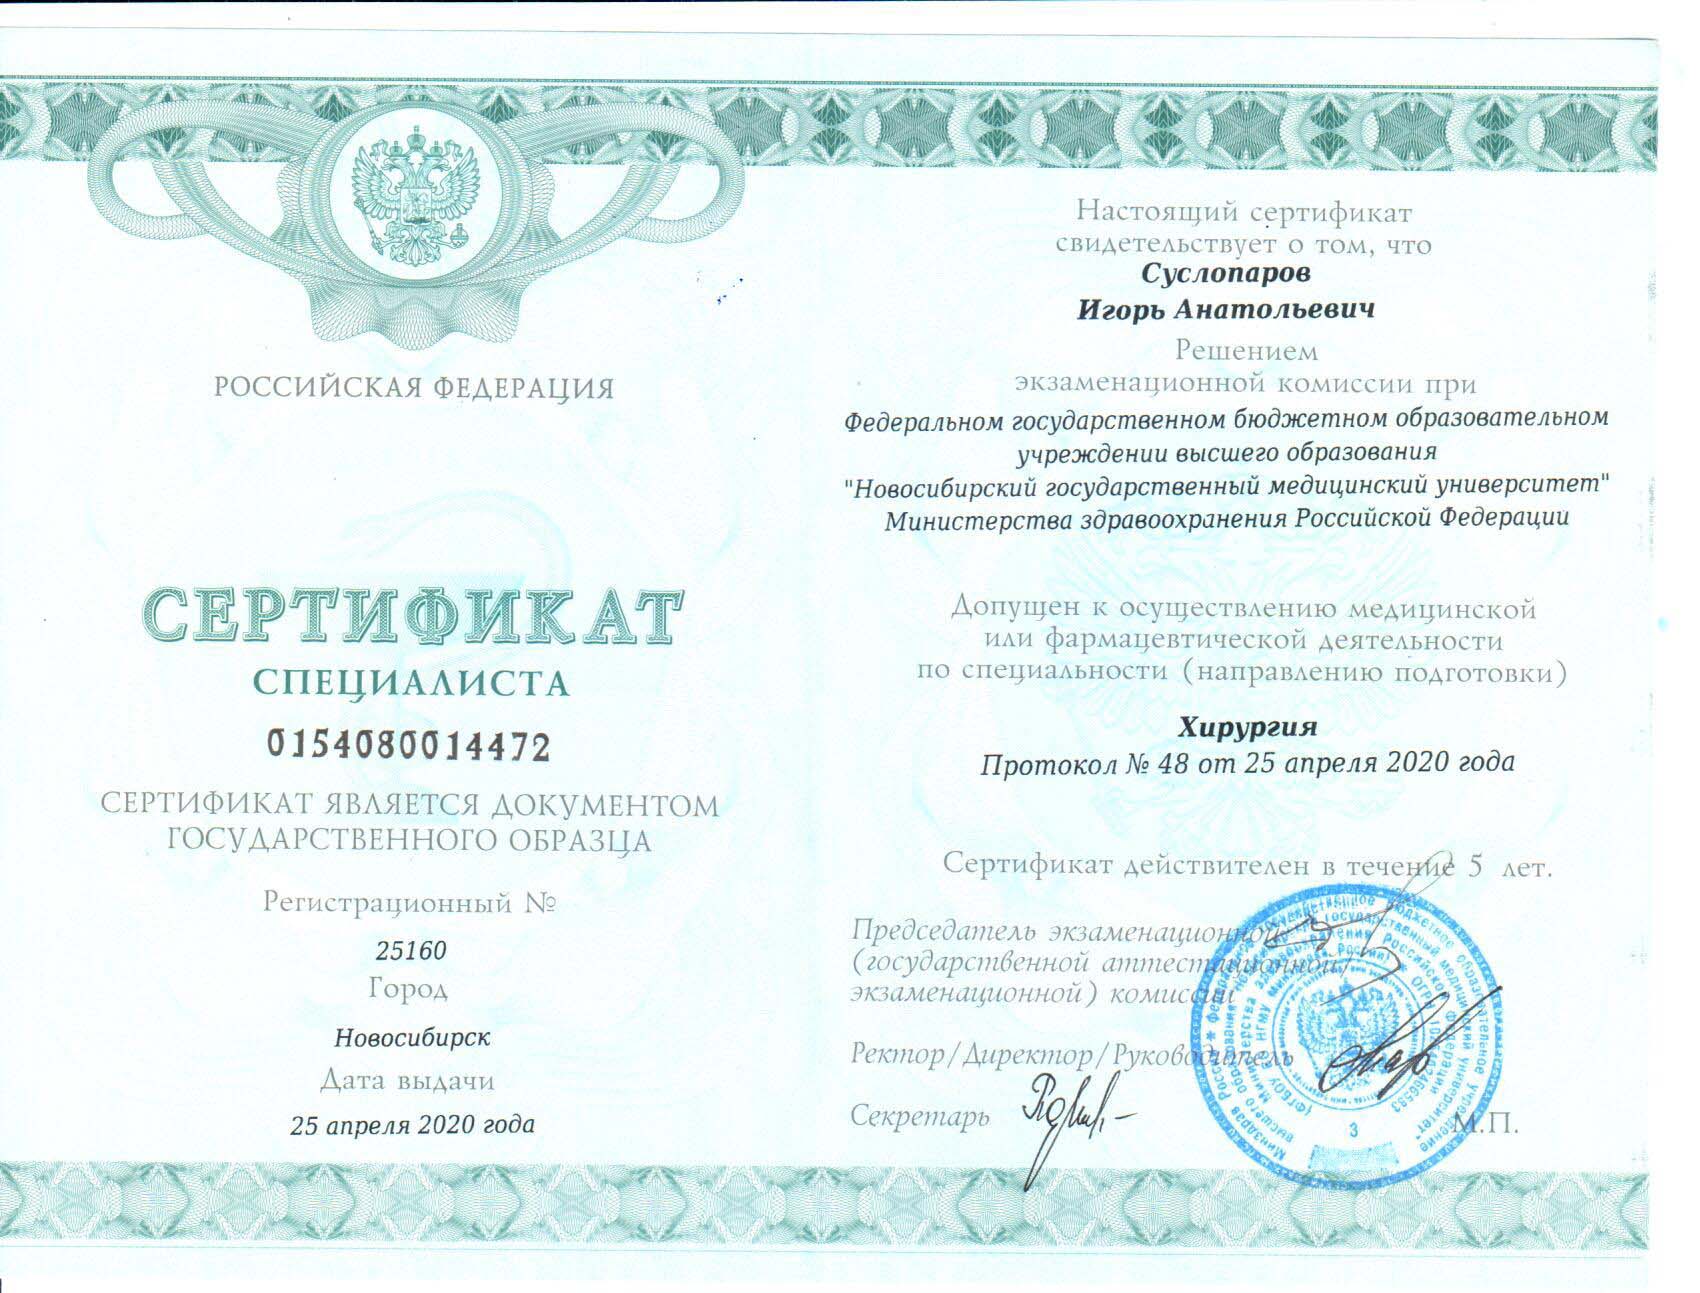 Хирургия. Сертификат Суслопарова И.А.